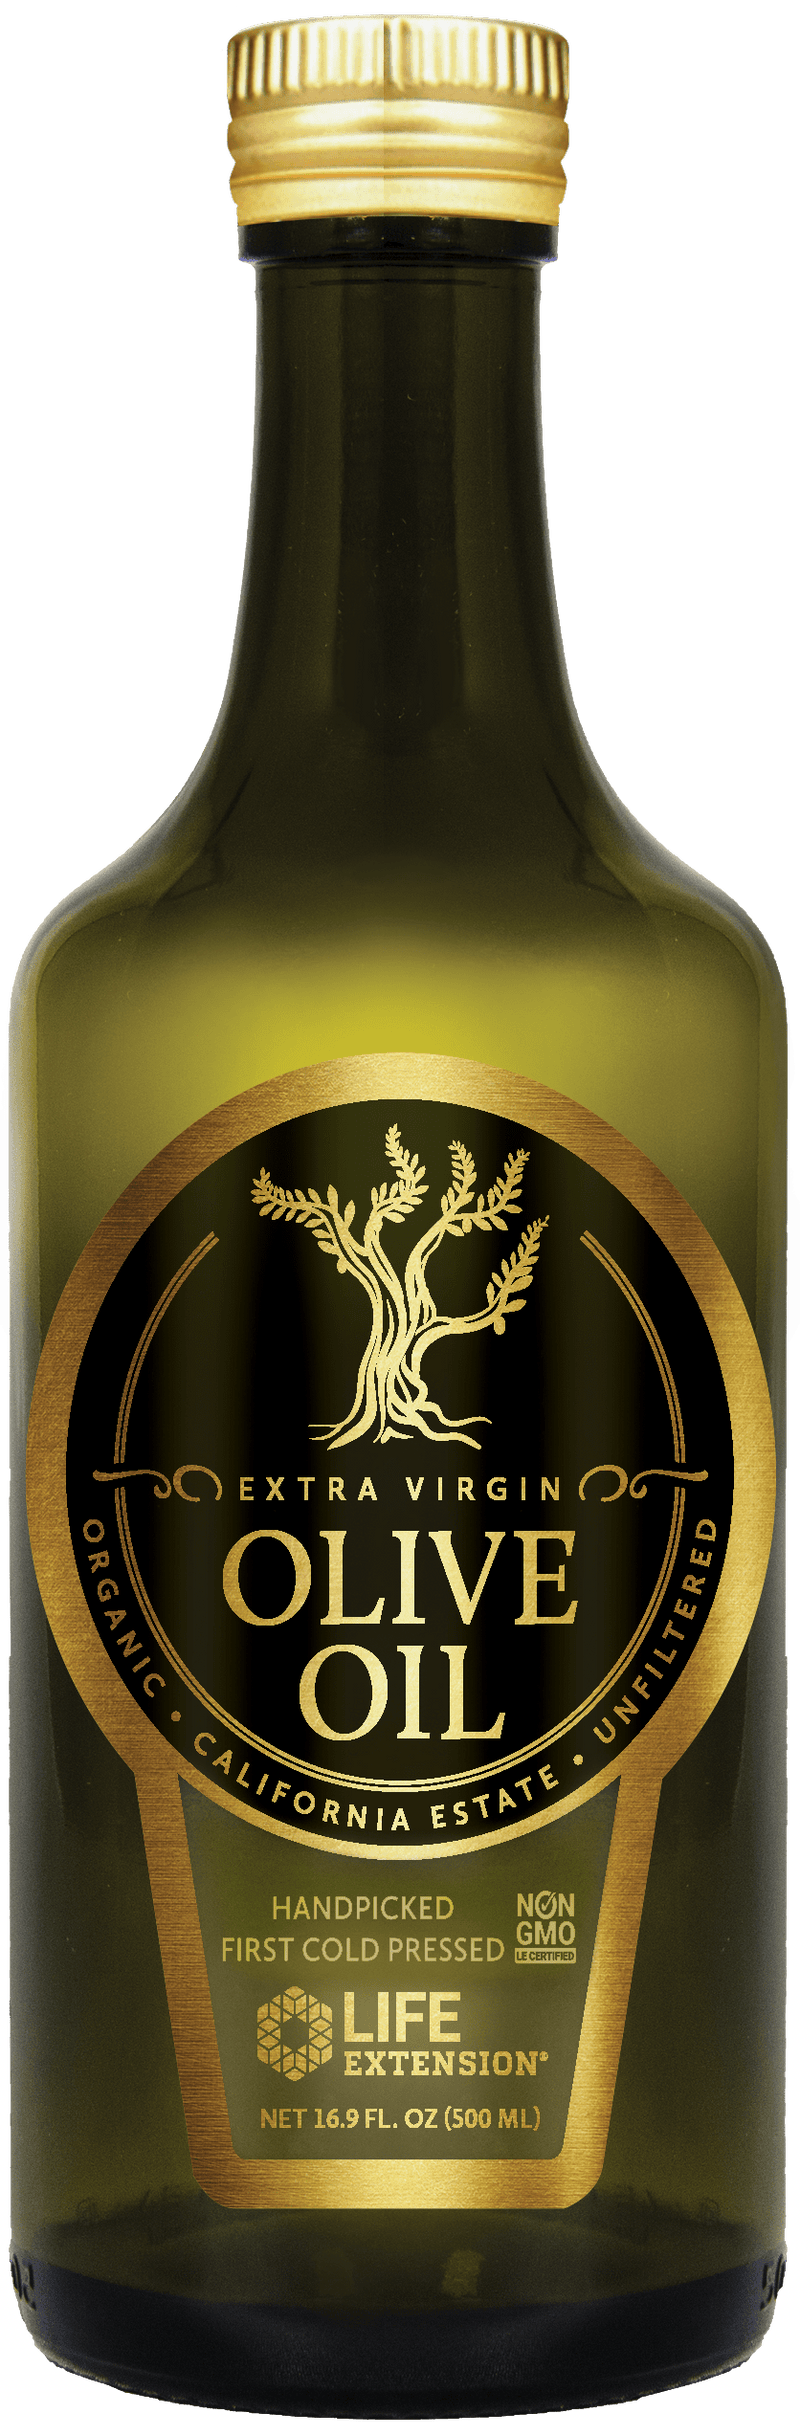 Life Extension California Estate Organic Extra Virgin Olive Oil -- 500 Ml